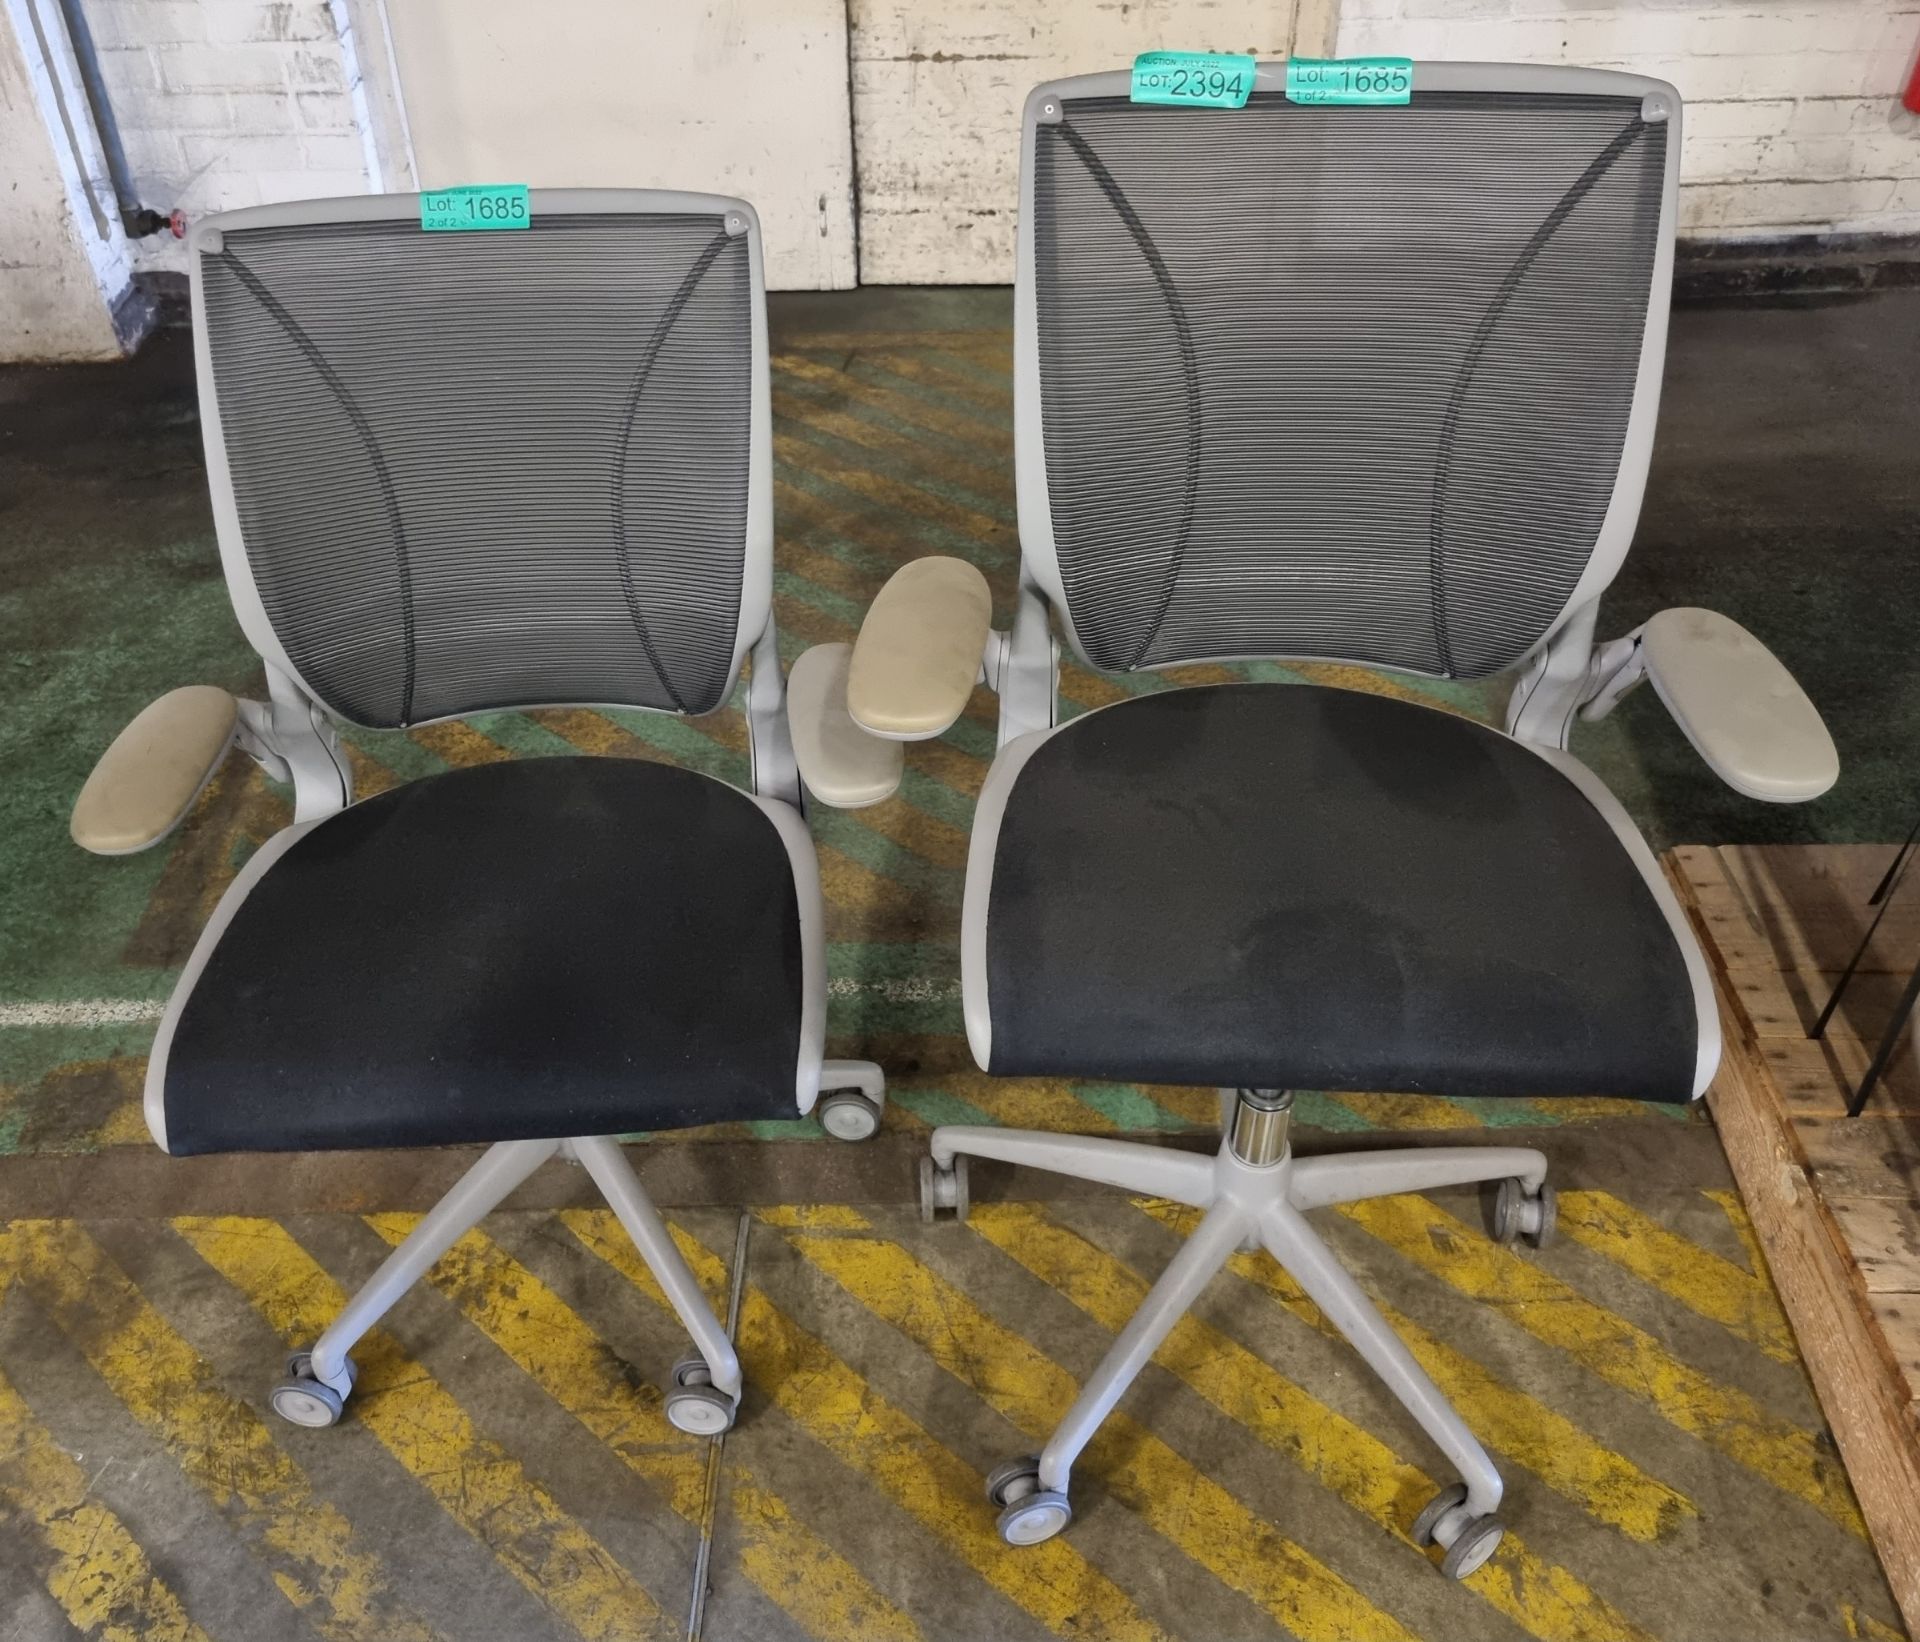 2x HumanScale Ergonomic Office Chair